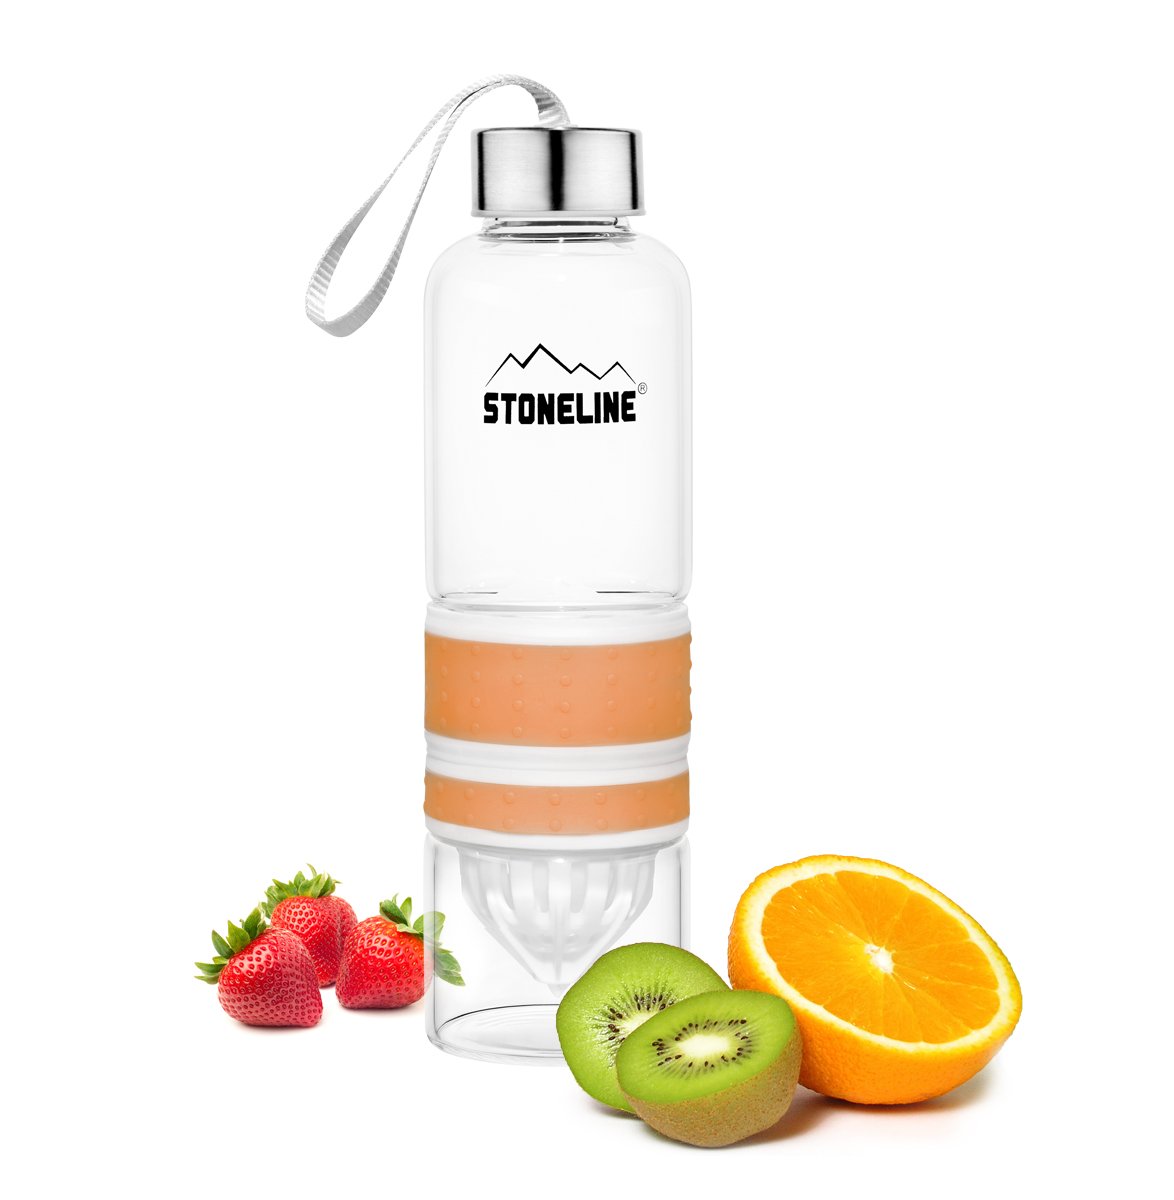 STONELINE® 2 in 1 Drinking Bottle with Juicer, orange